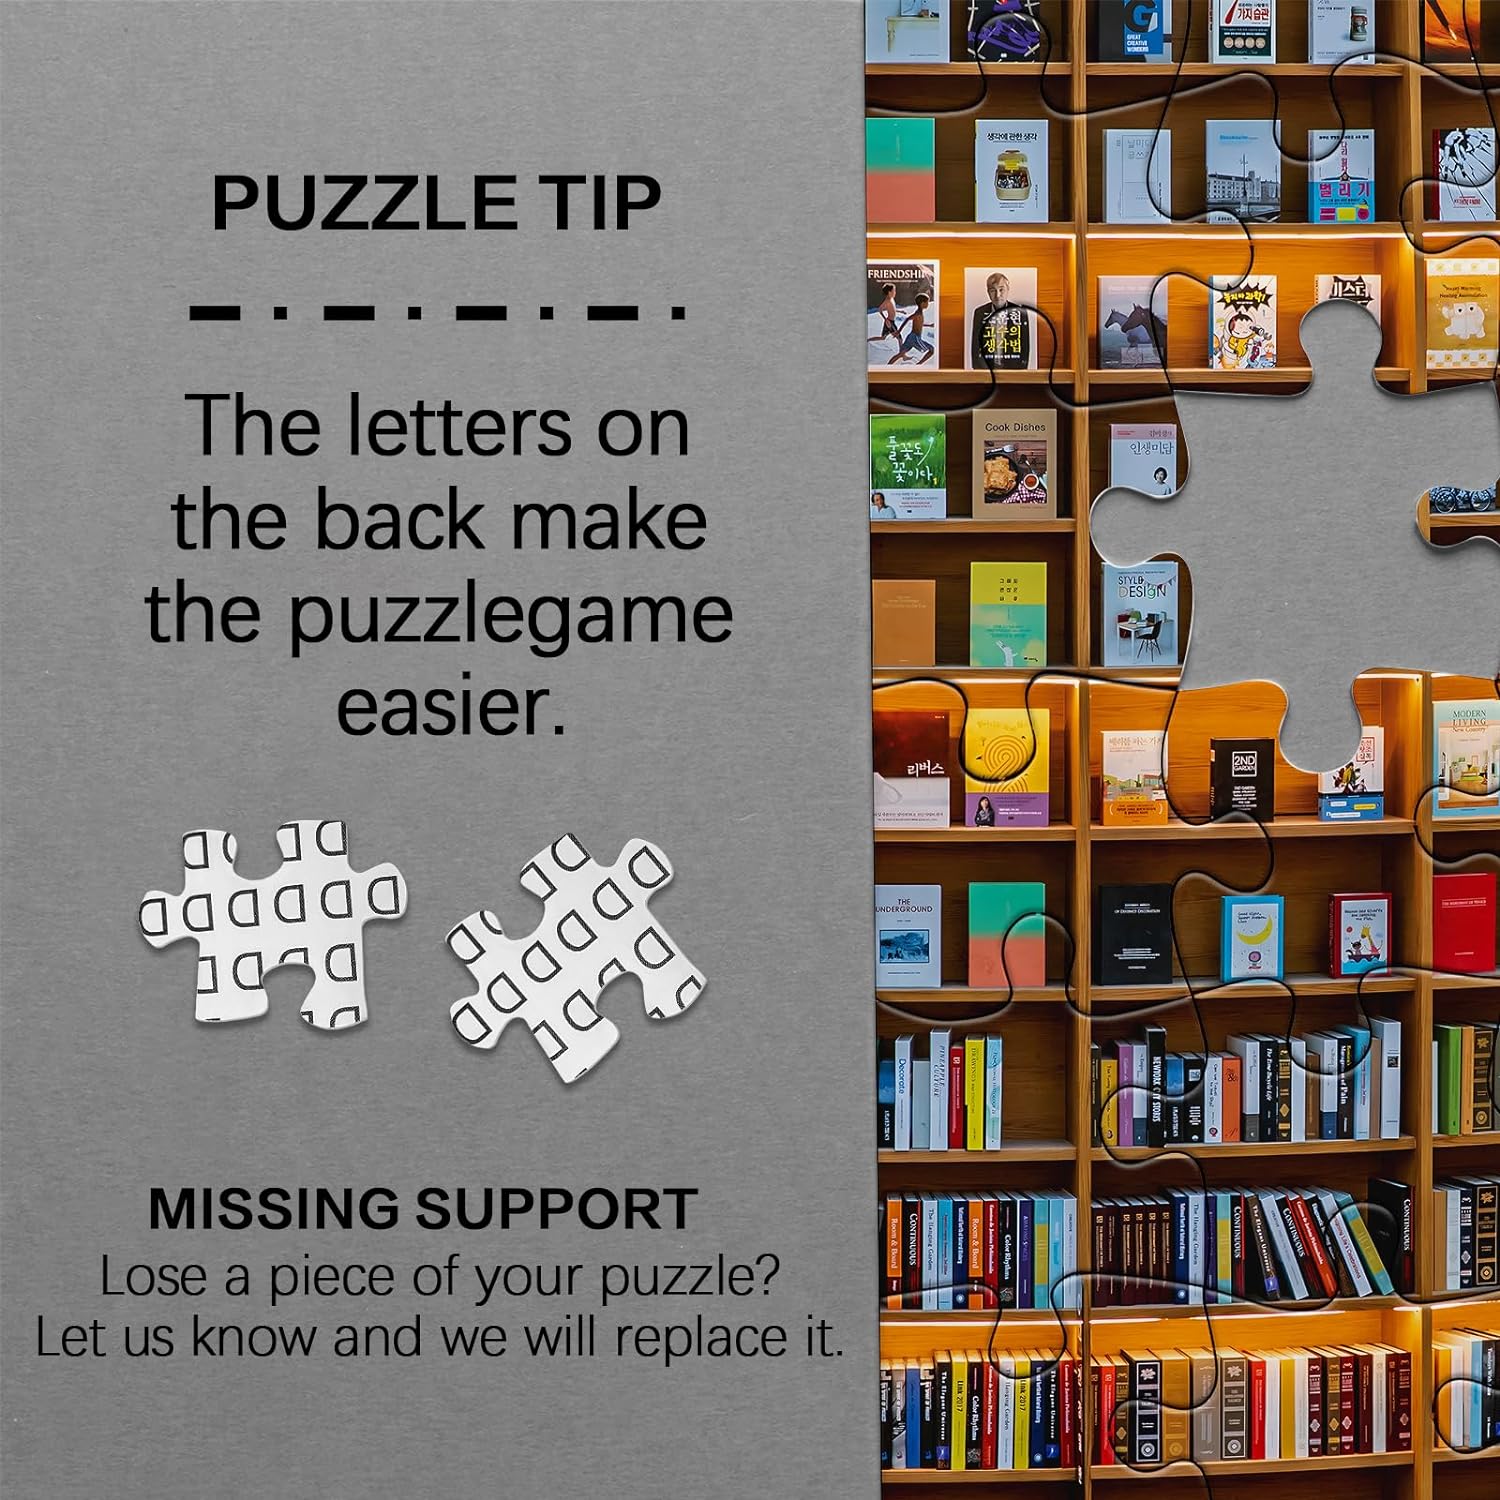 Bookshelf Library Jigsaw Puzzle 1000 Pieces